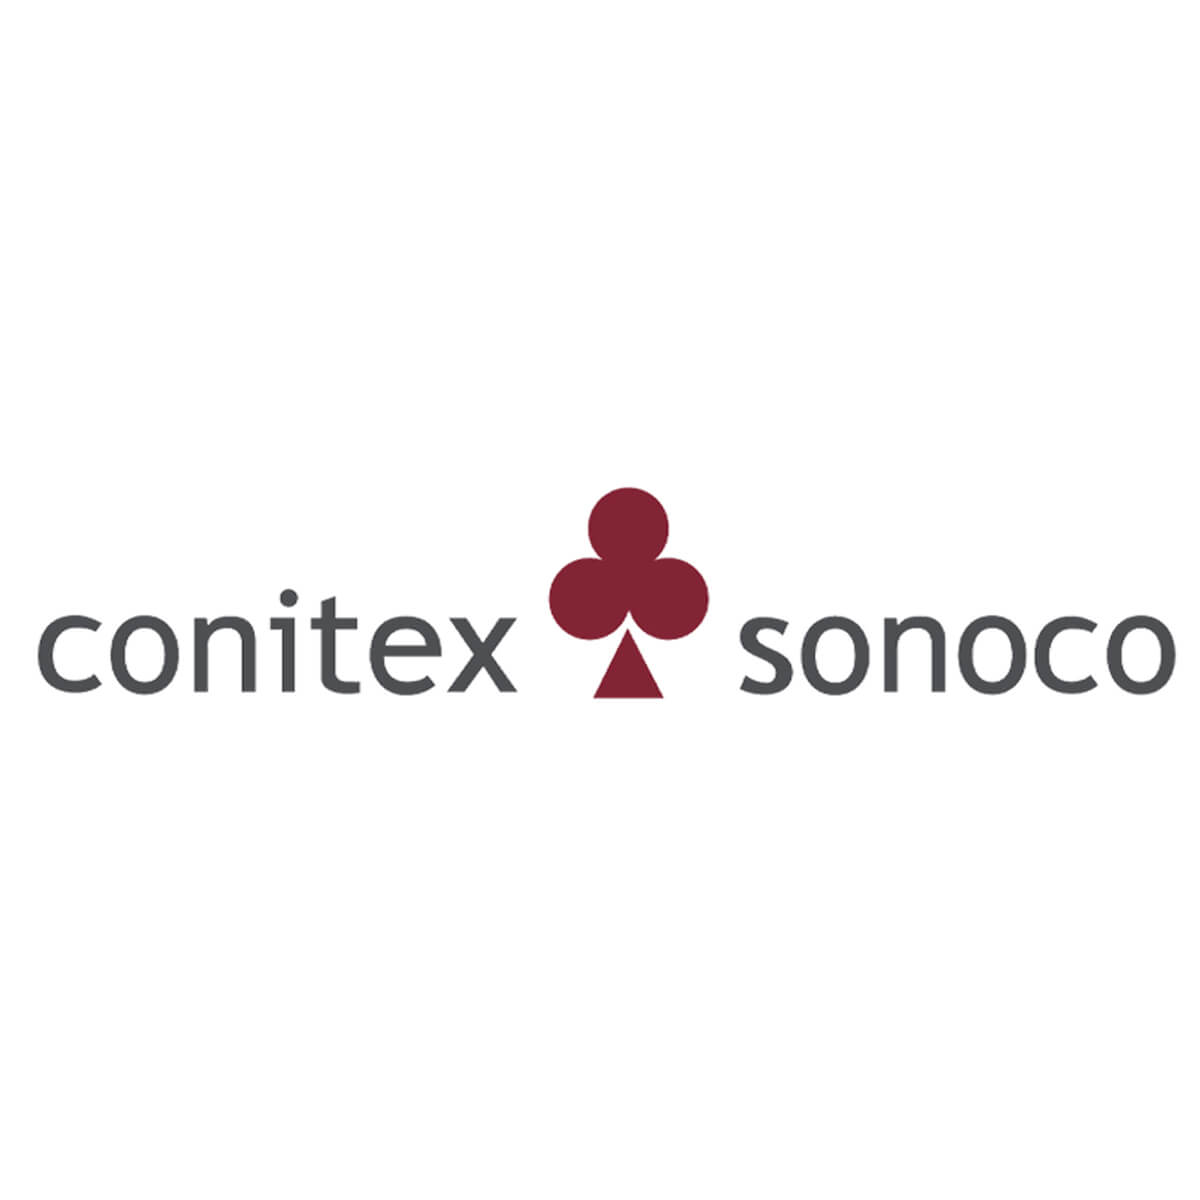 Conitex Sonoco Case Study